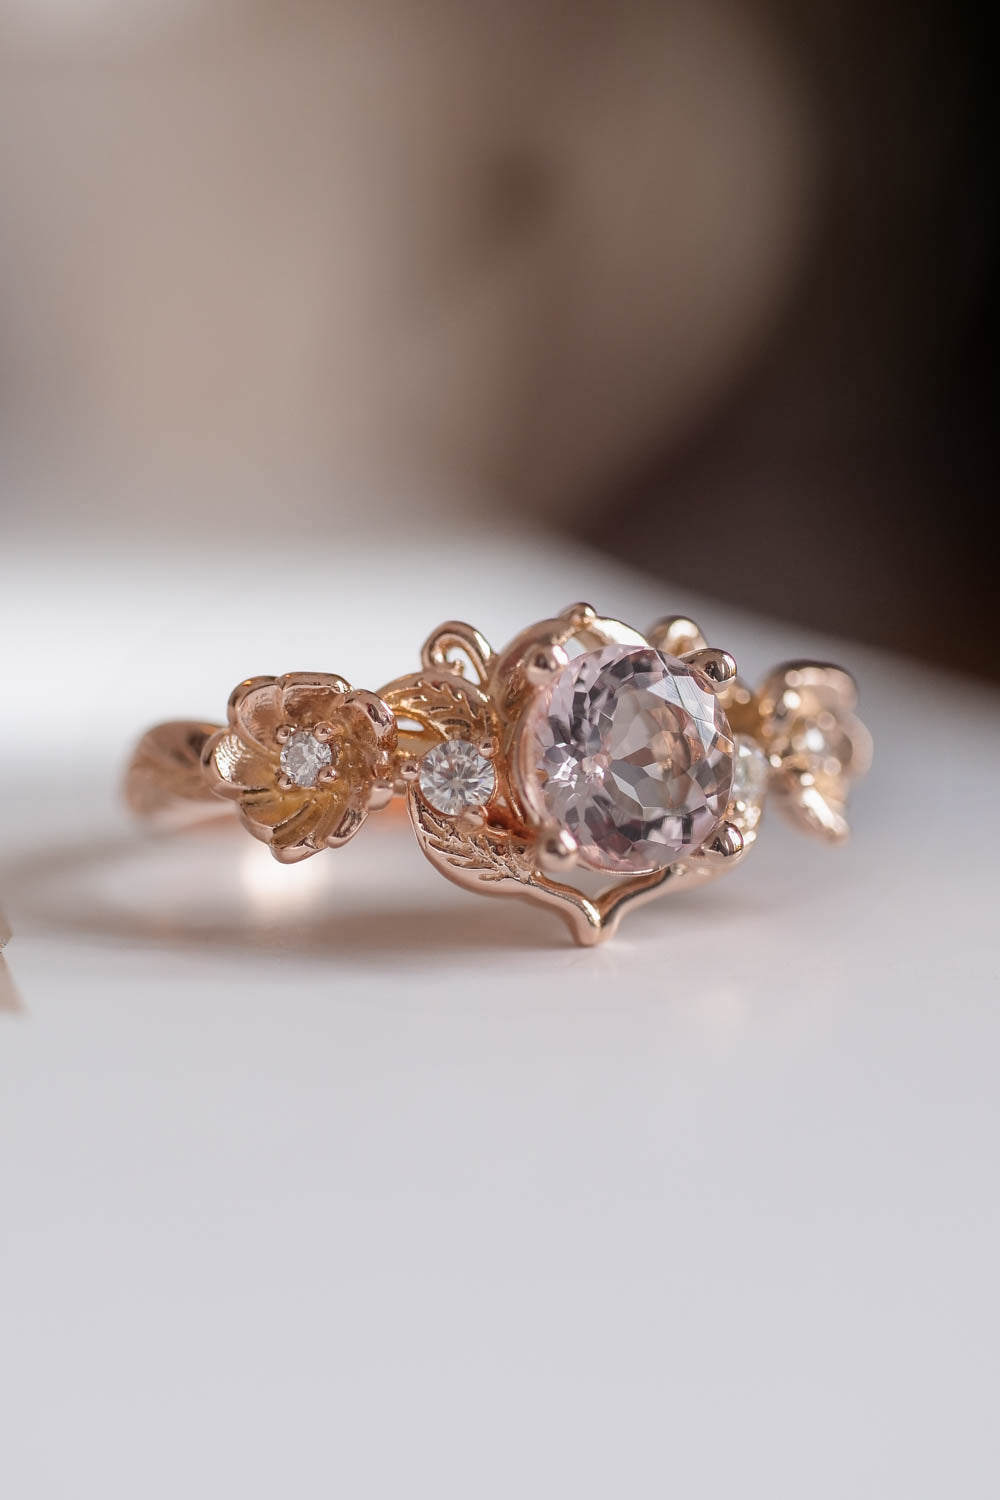 floral engagement ring with pibk morganite gemstone